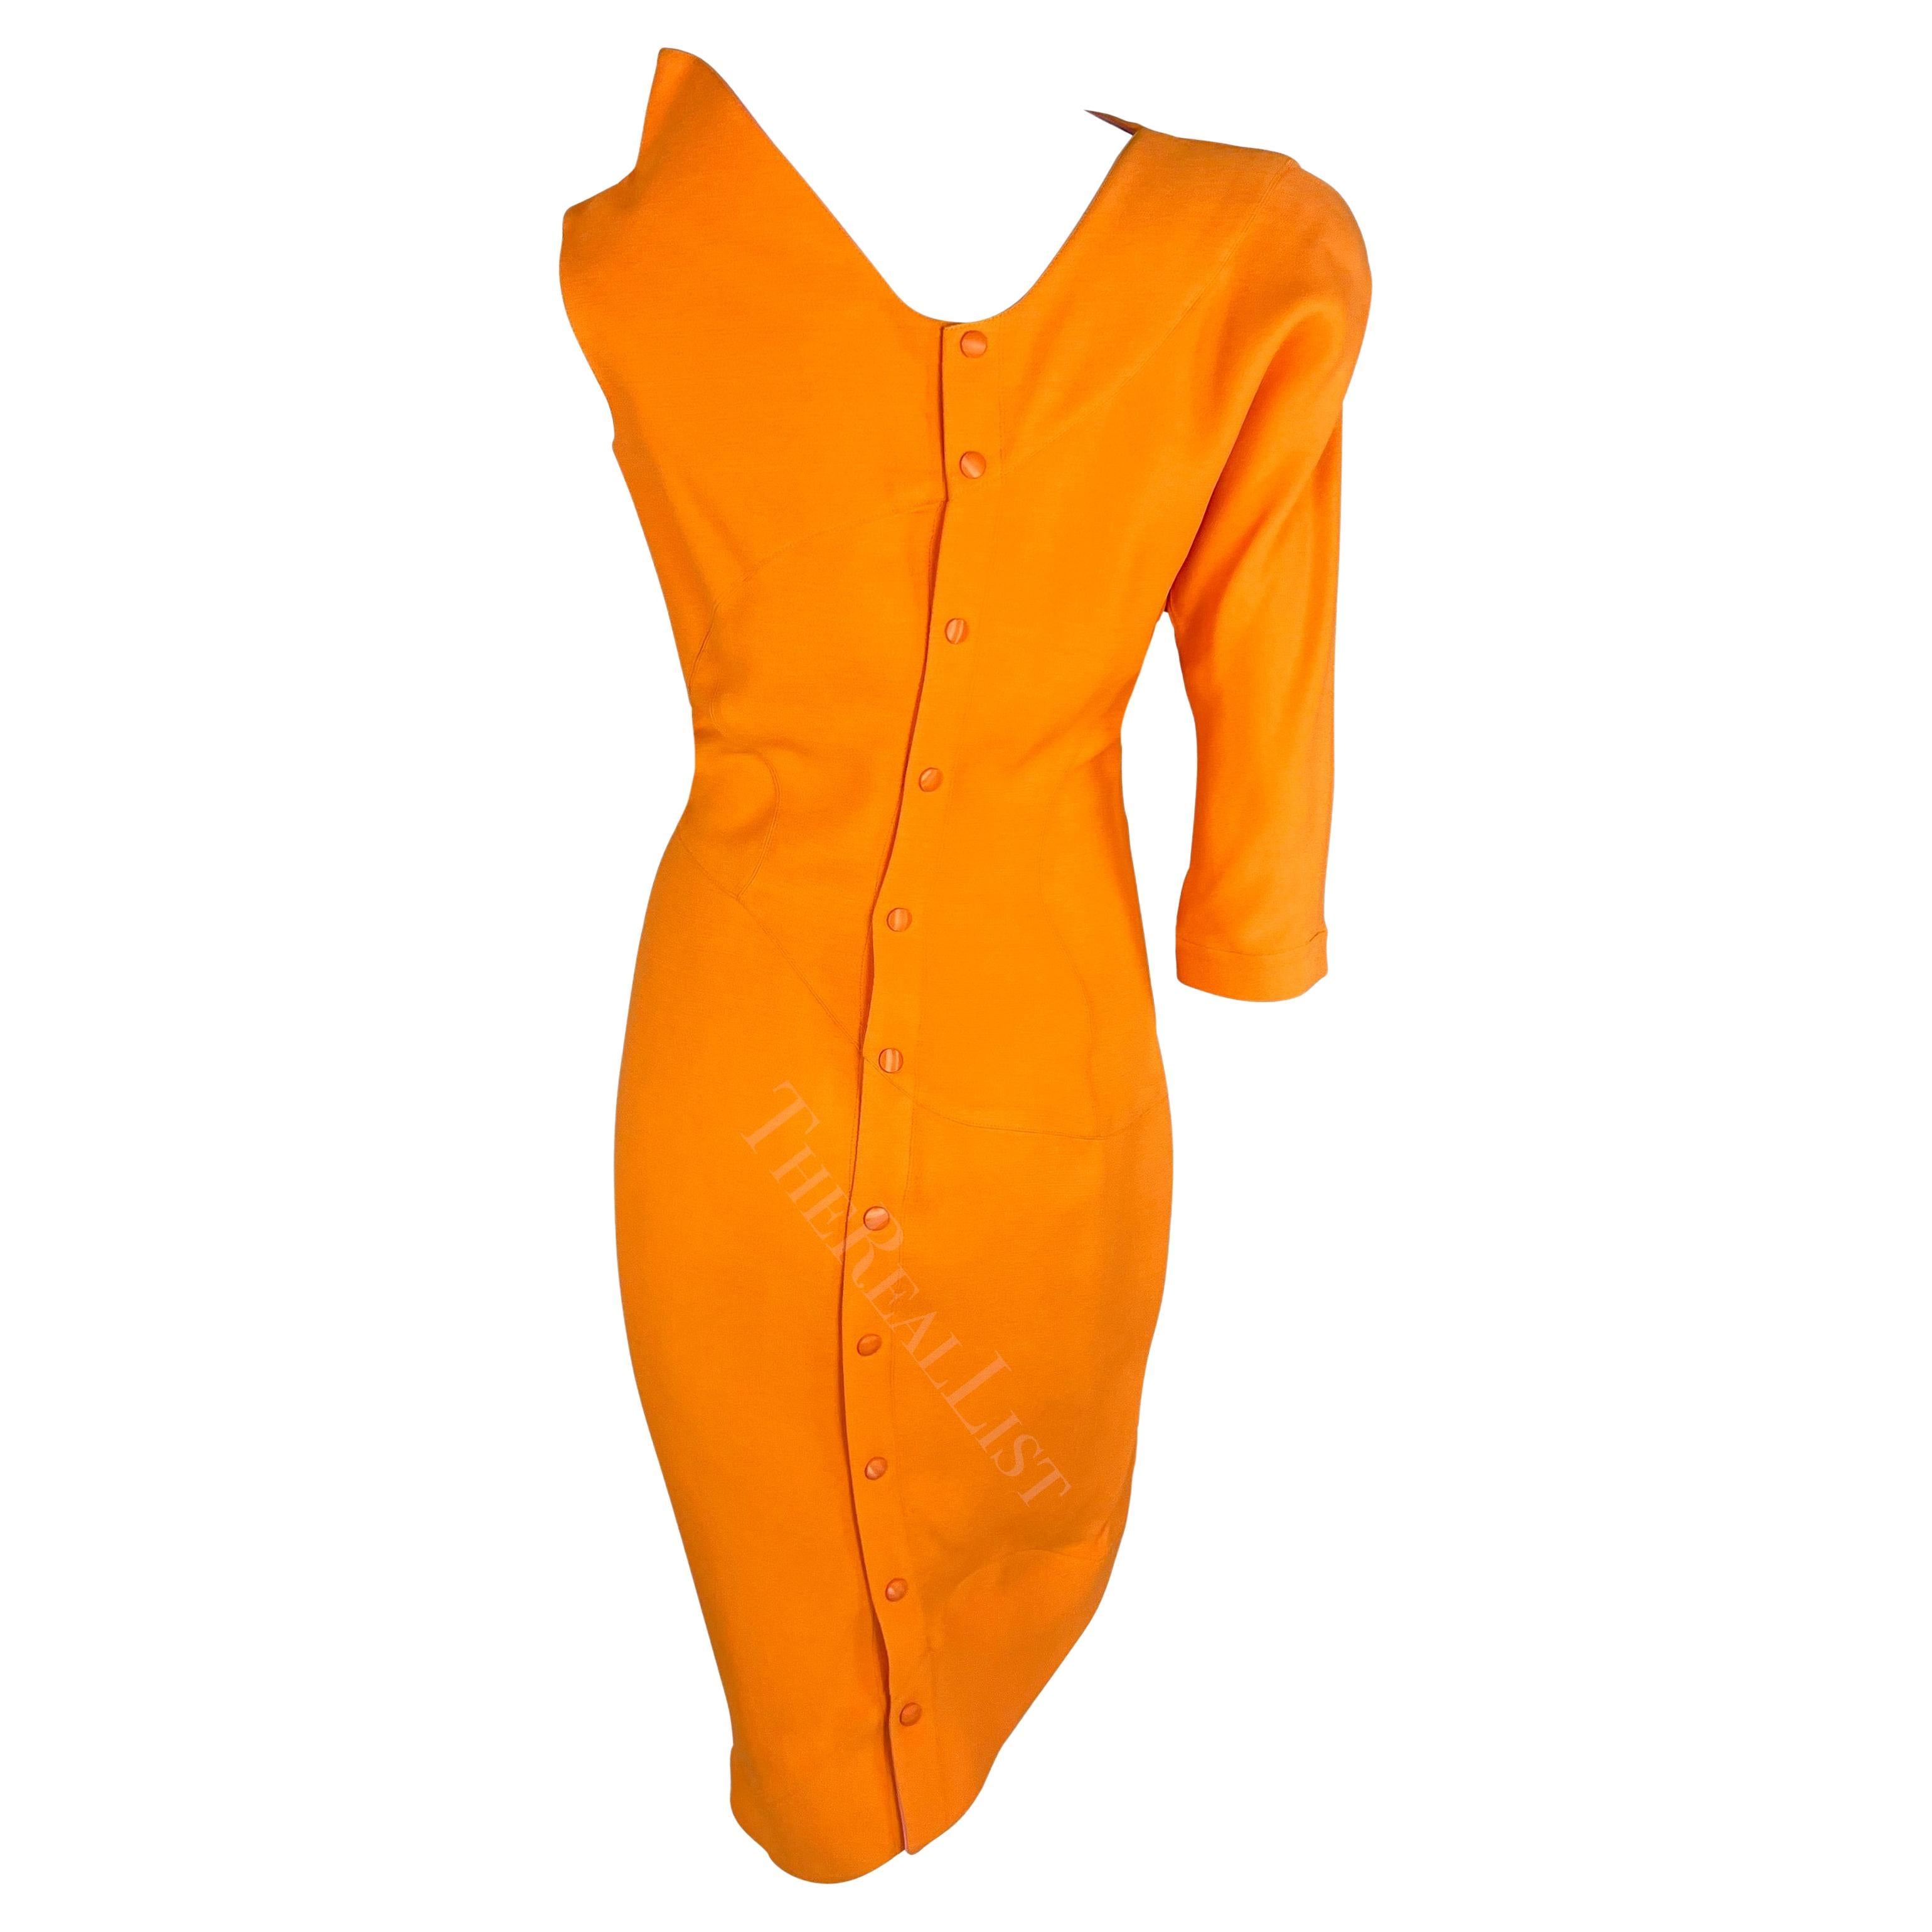 S/S 1988 Thierry Mugler Runway Ad Orange One Sleeve Sculptural Sahara Dress For Sale 3